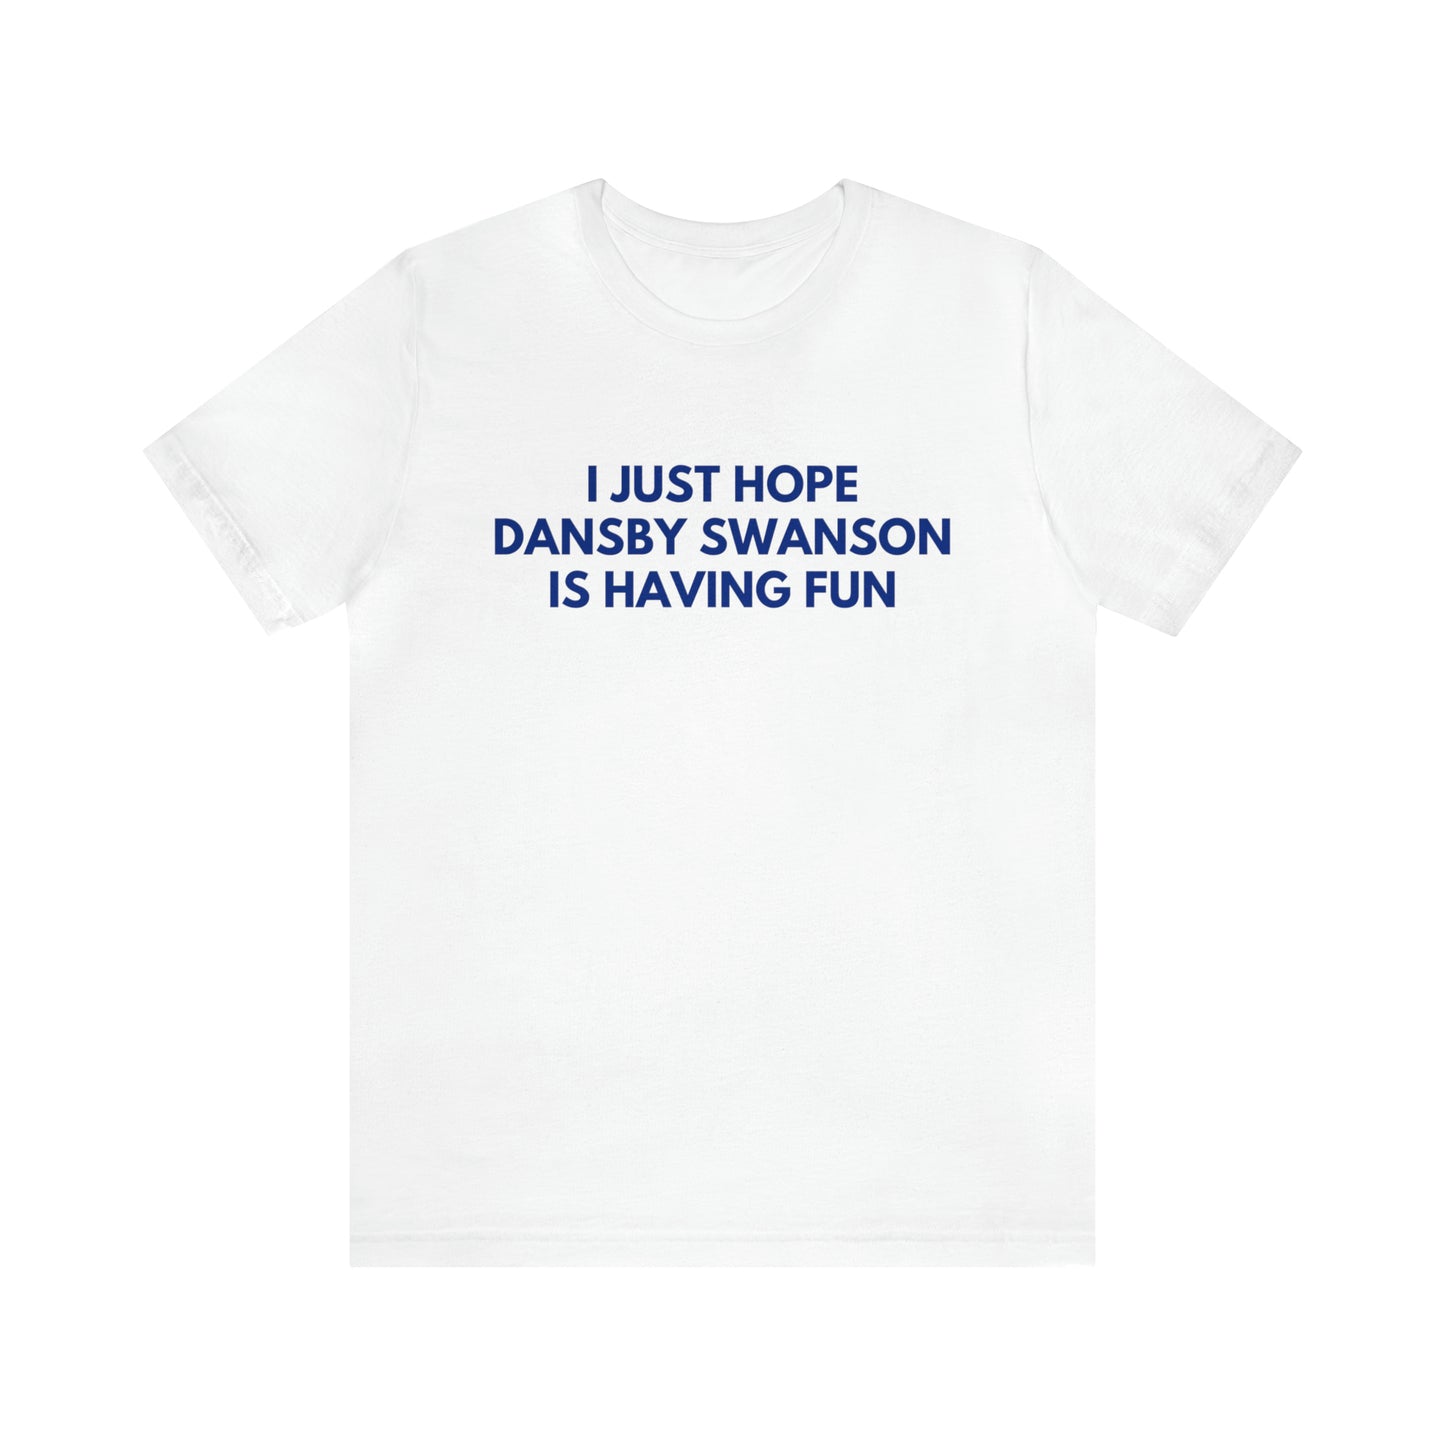 Dansby Swanson Having Fun - Unisex T-shirt